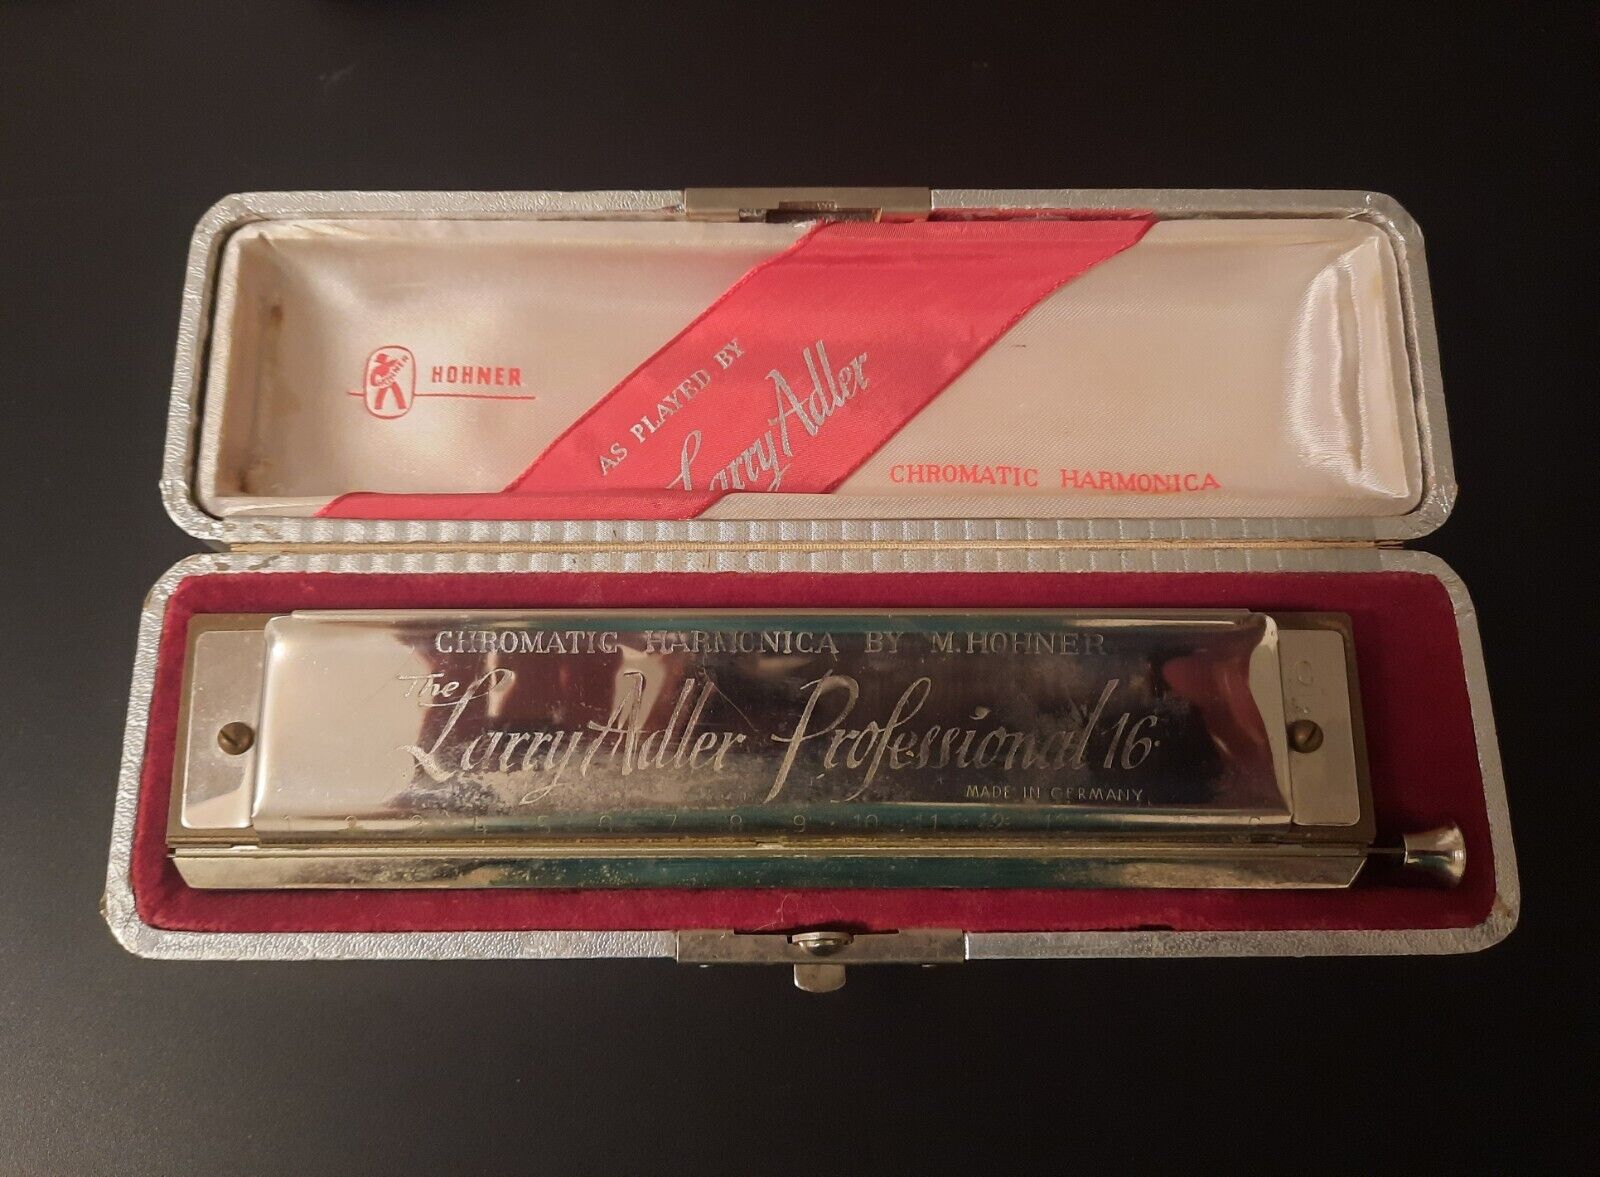 1960s Larry Adler Profesional 16 - Hohner Chromatic Harmonica - Made In Germany